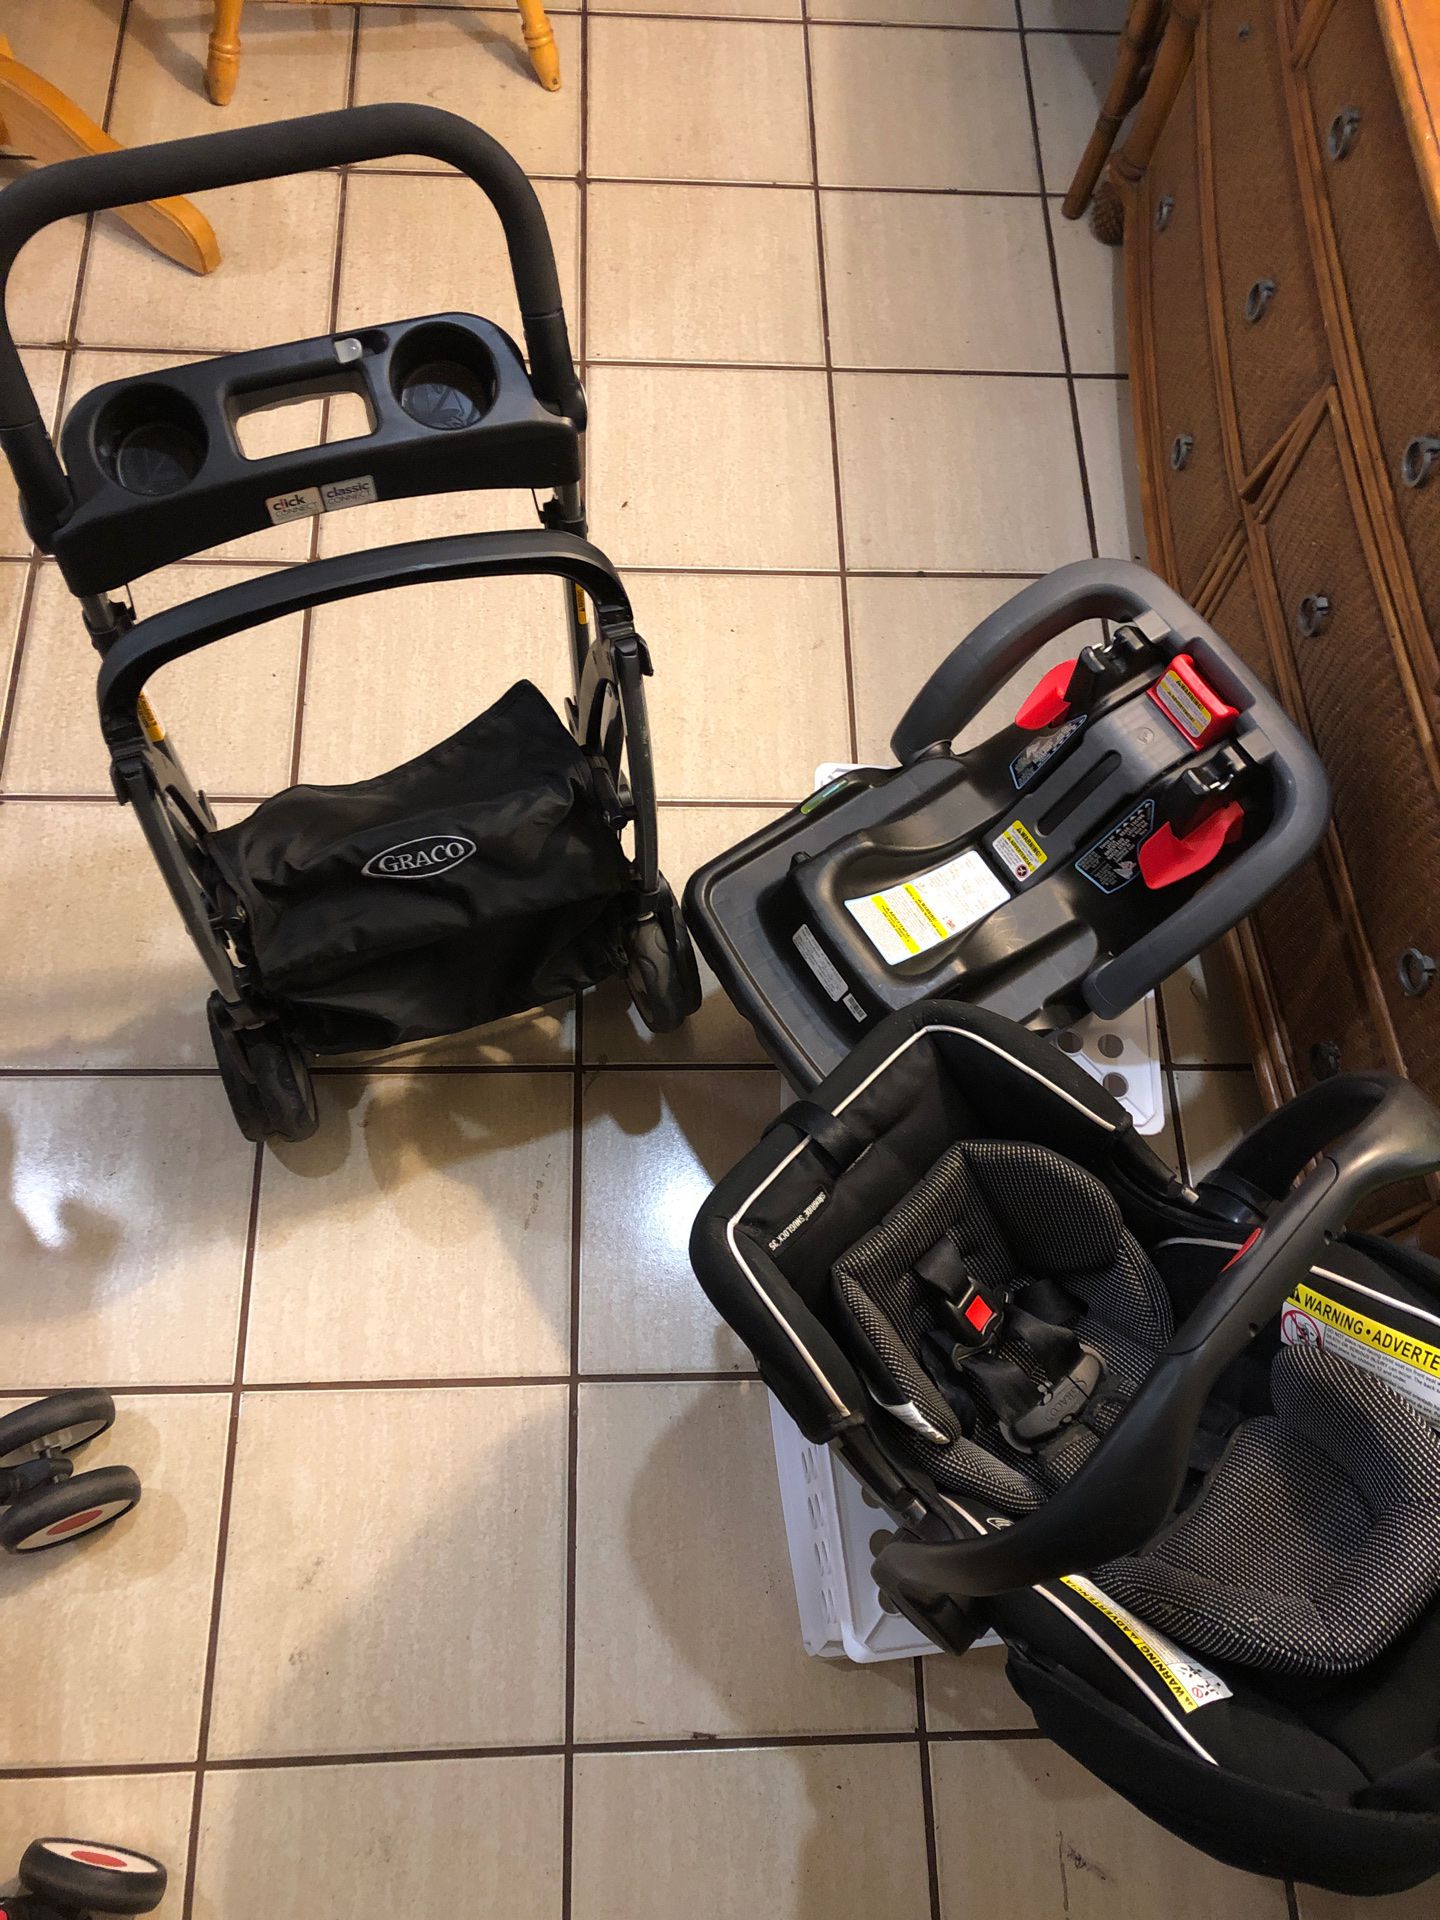 Graco newborn car seat, base and stroller